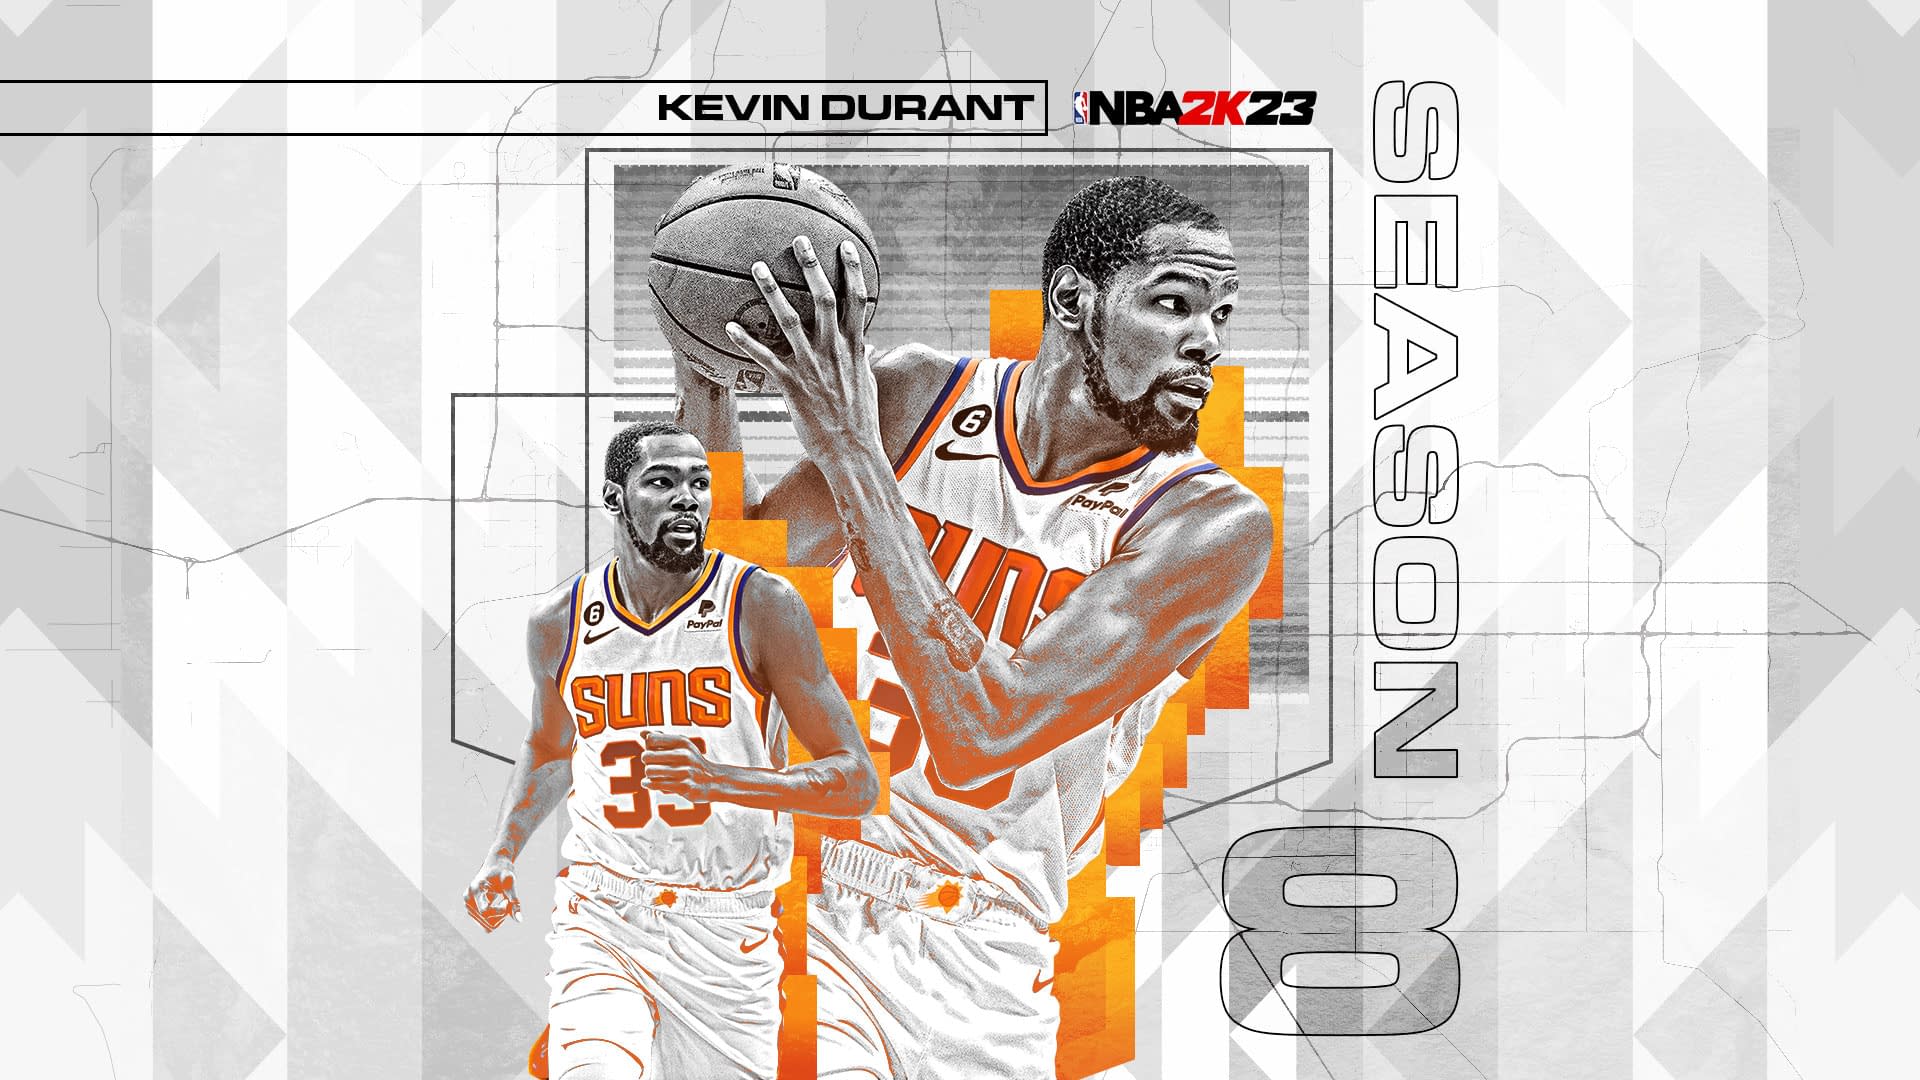 NBA 2K23 Season 1 Launch